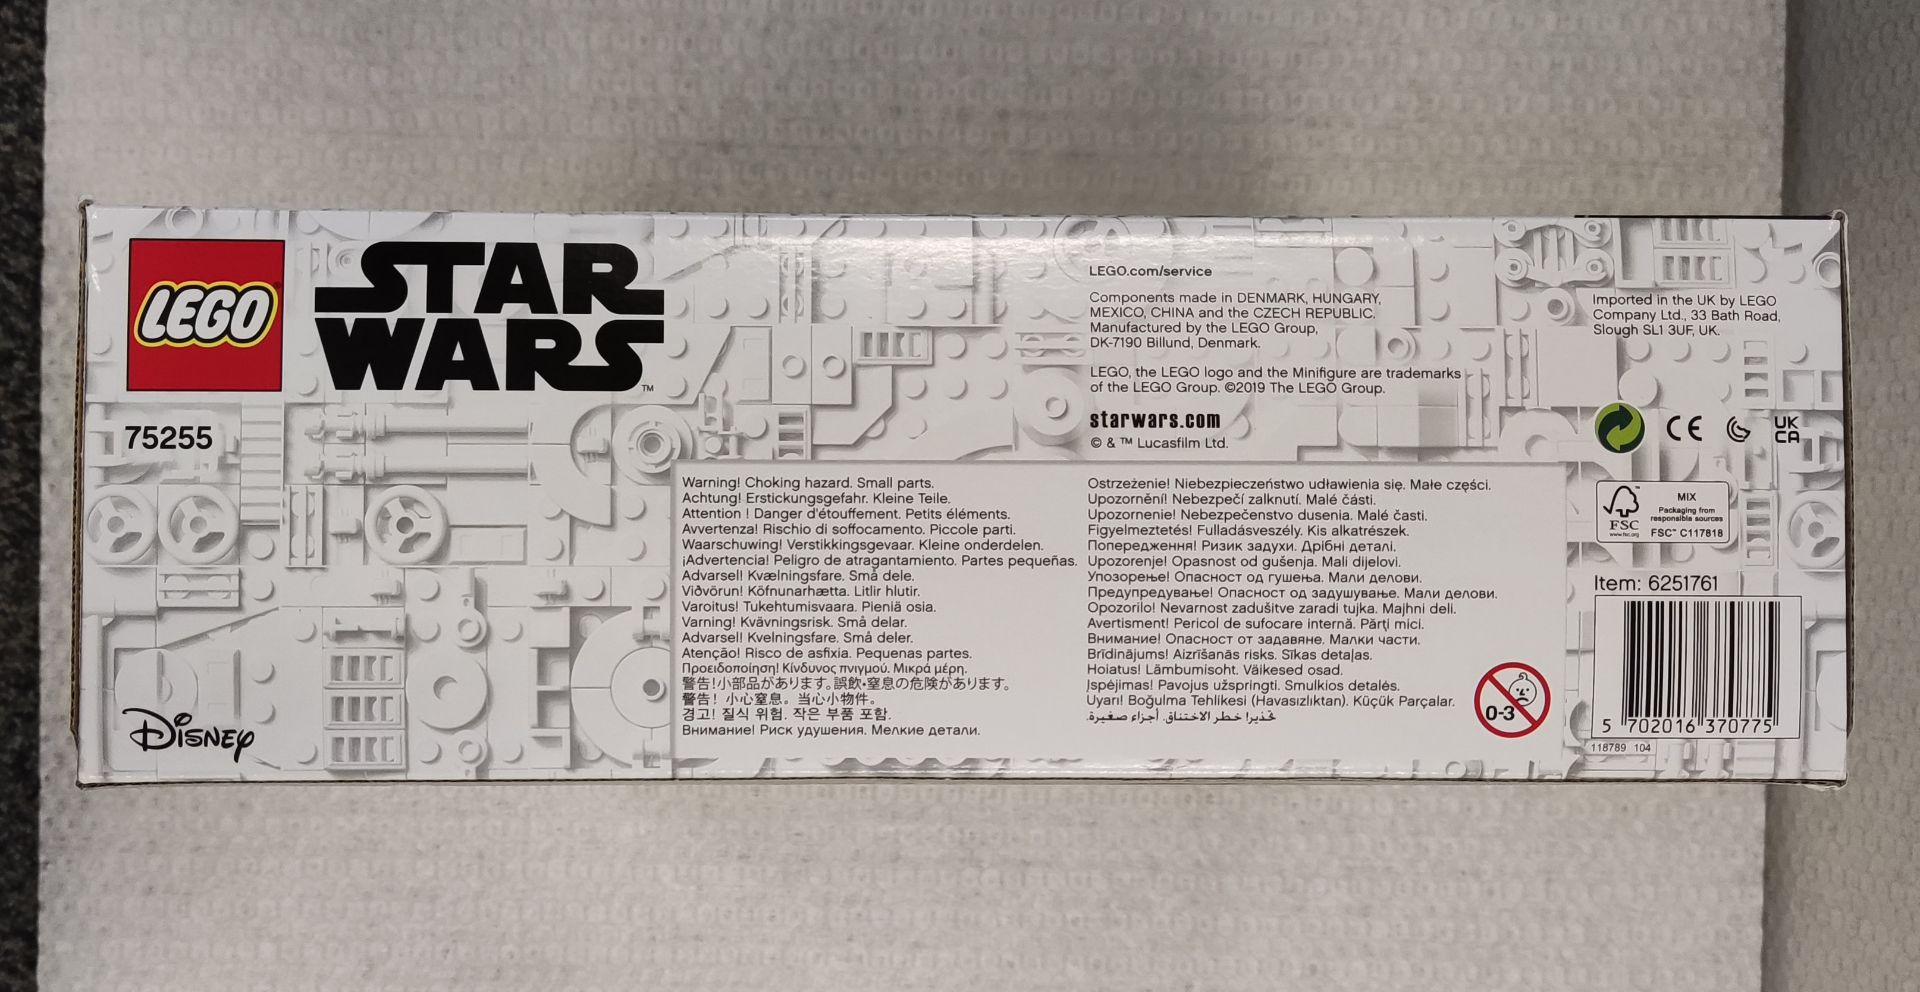 1 x Lego Star Wars Yoda - Model 75255 - New/Boxed - Image 7 of 7